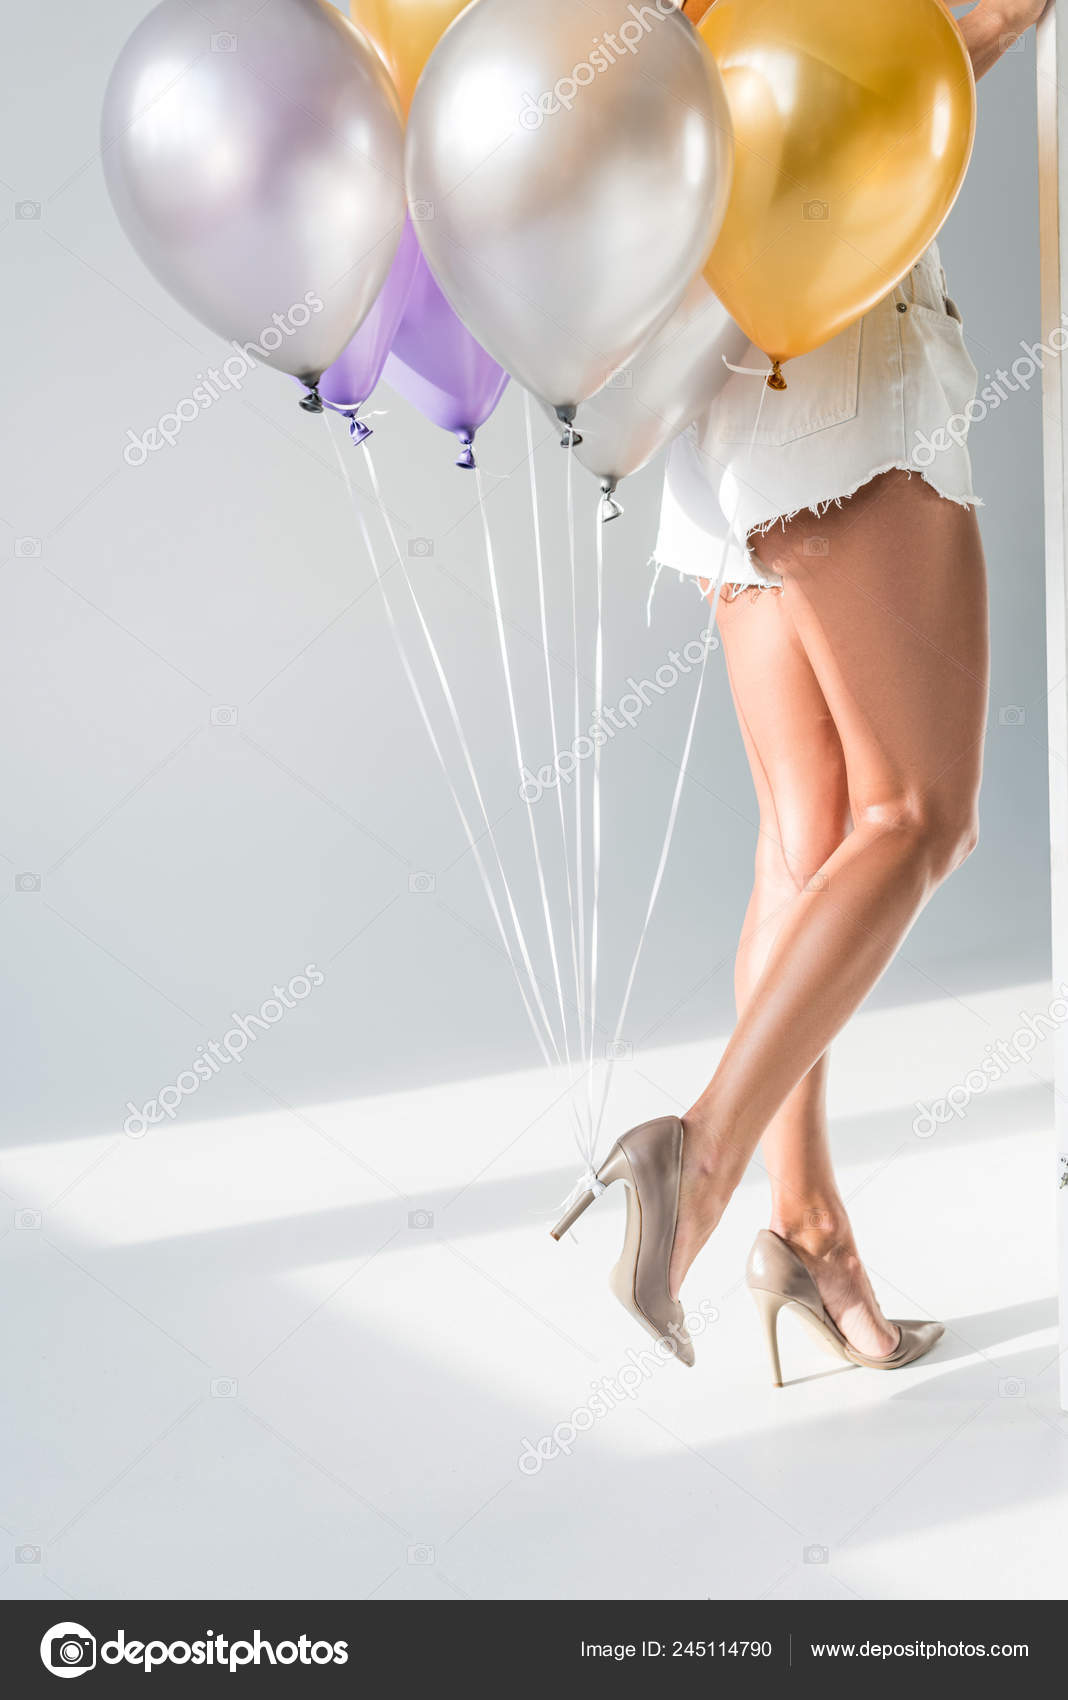 balloon and high heels gallerie